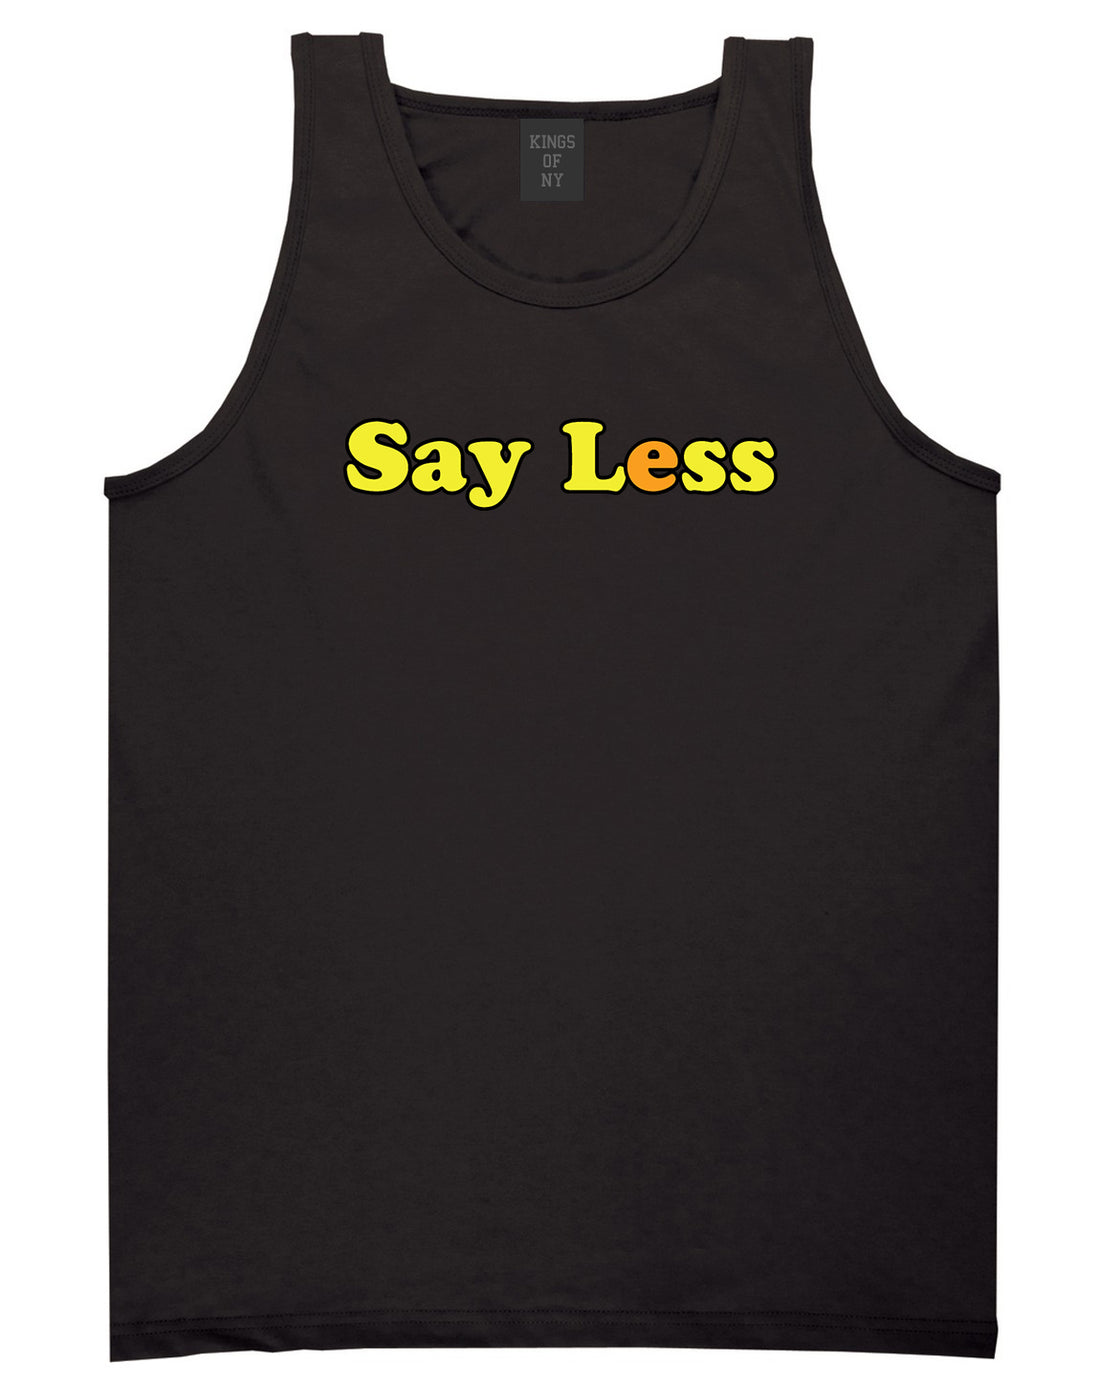 Say Less Mens Tank Top Shirt Black